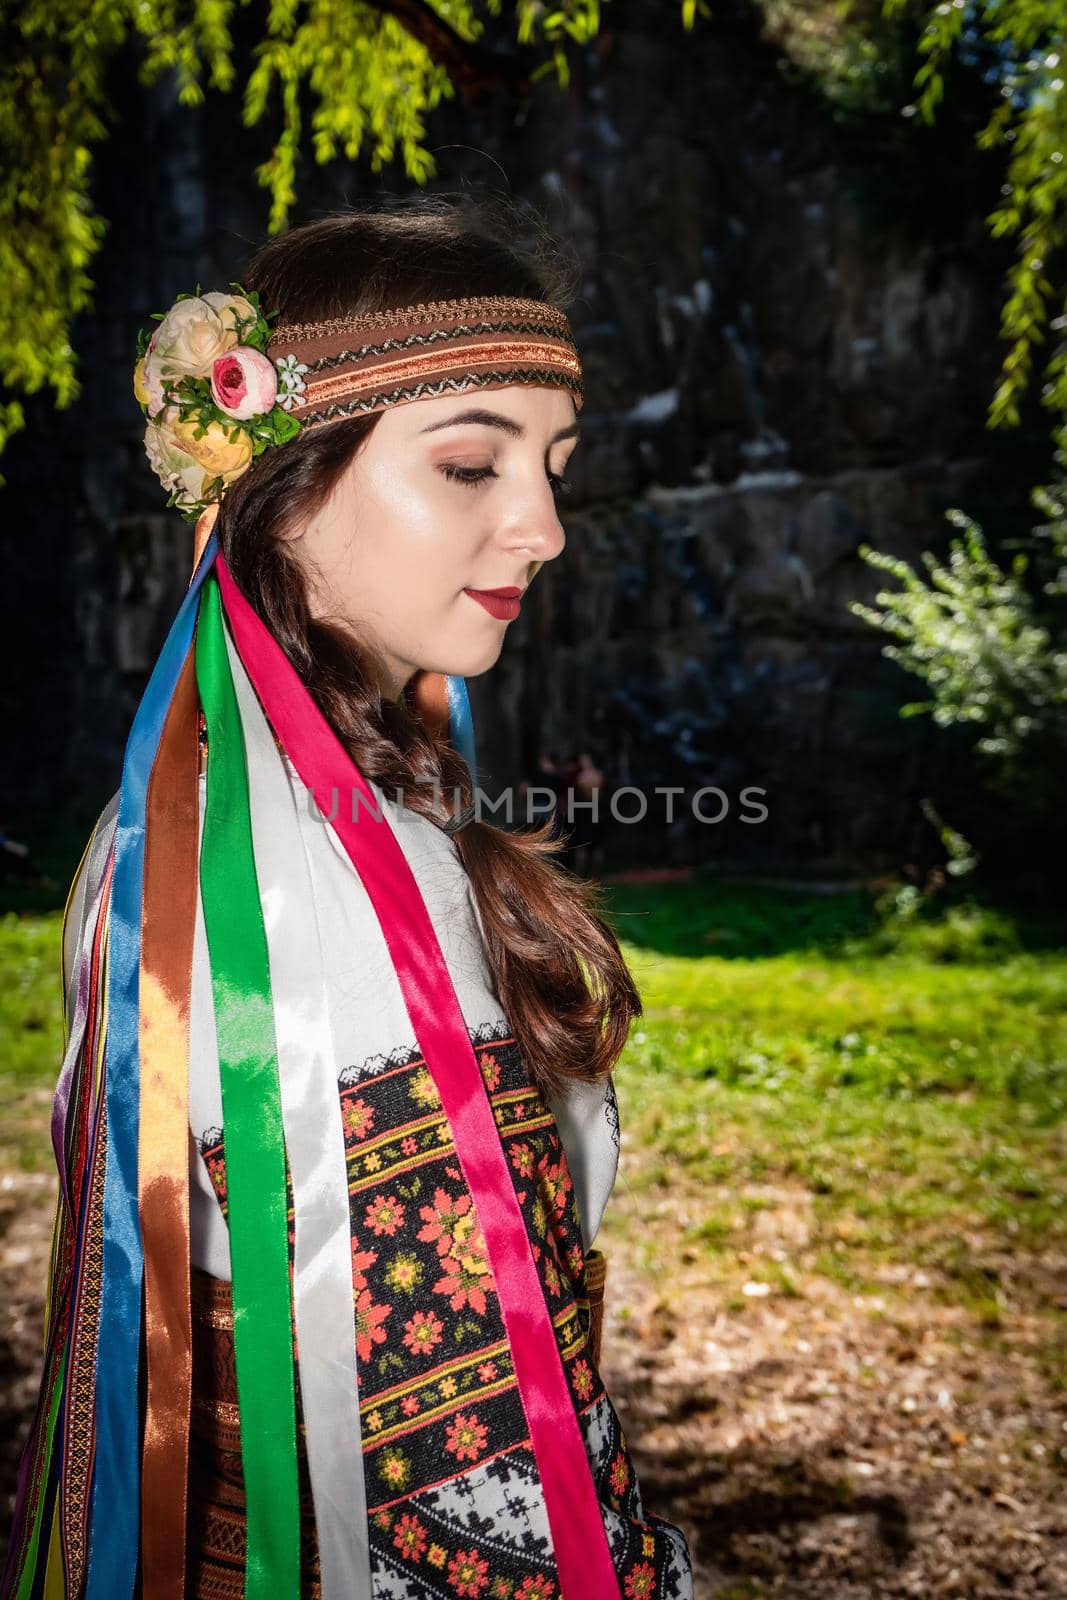 Beautiful Ukrainian girl in national Ukrainian clothes by Serhii_Voroshchuk